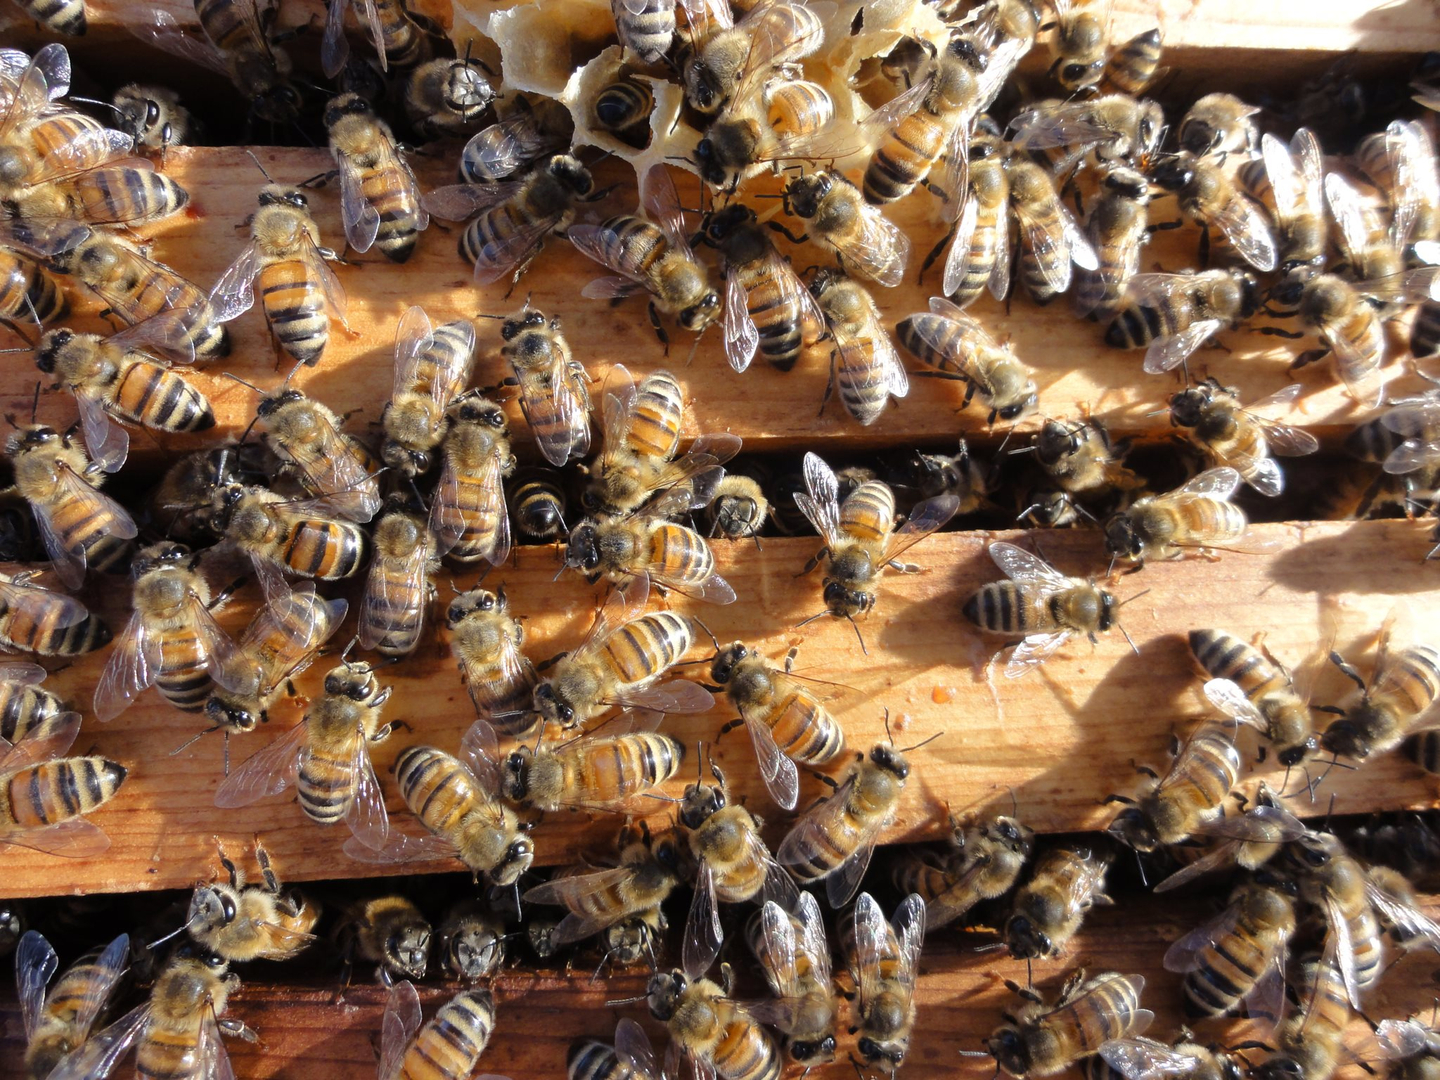 The Northeastern Kansas Beekeepers' Association